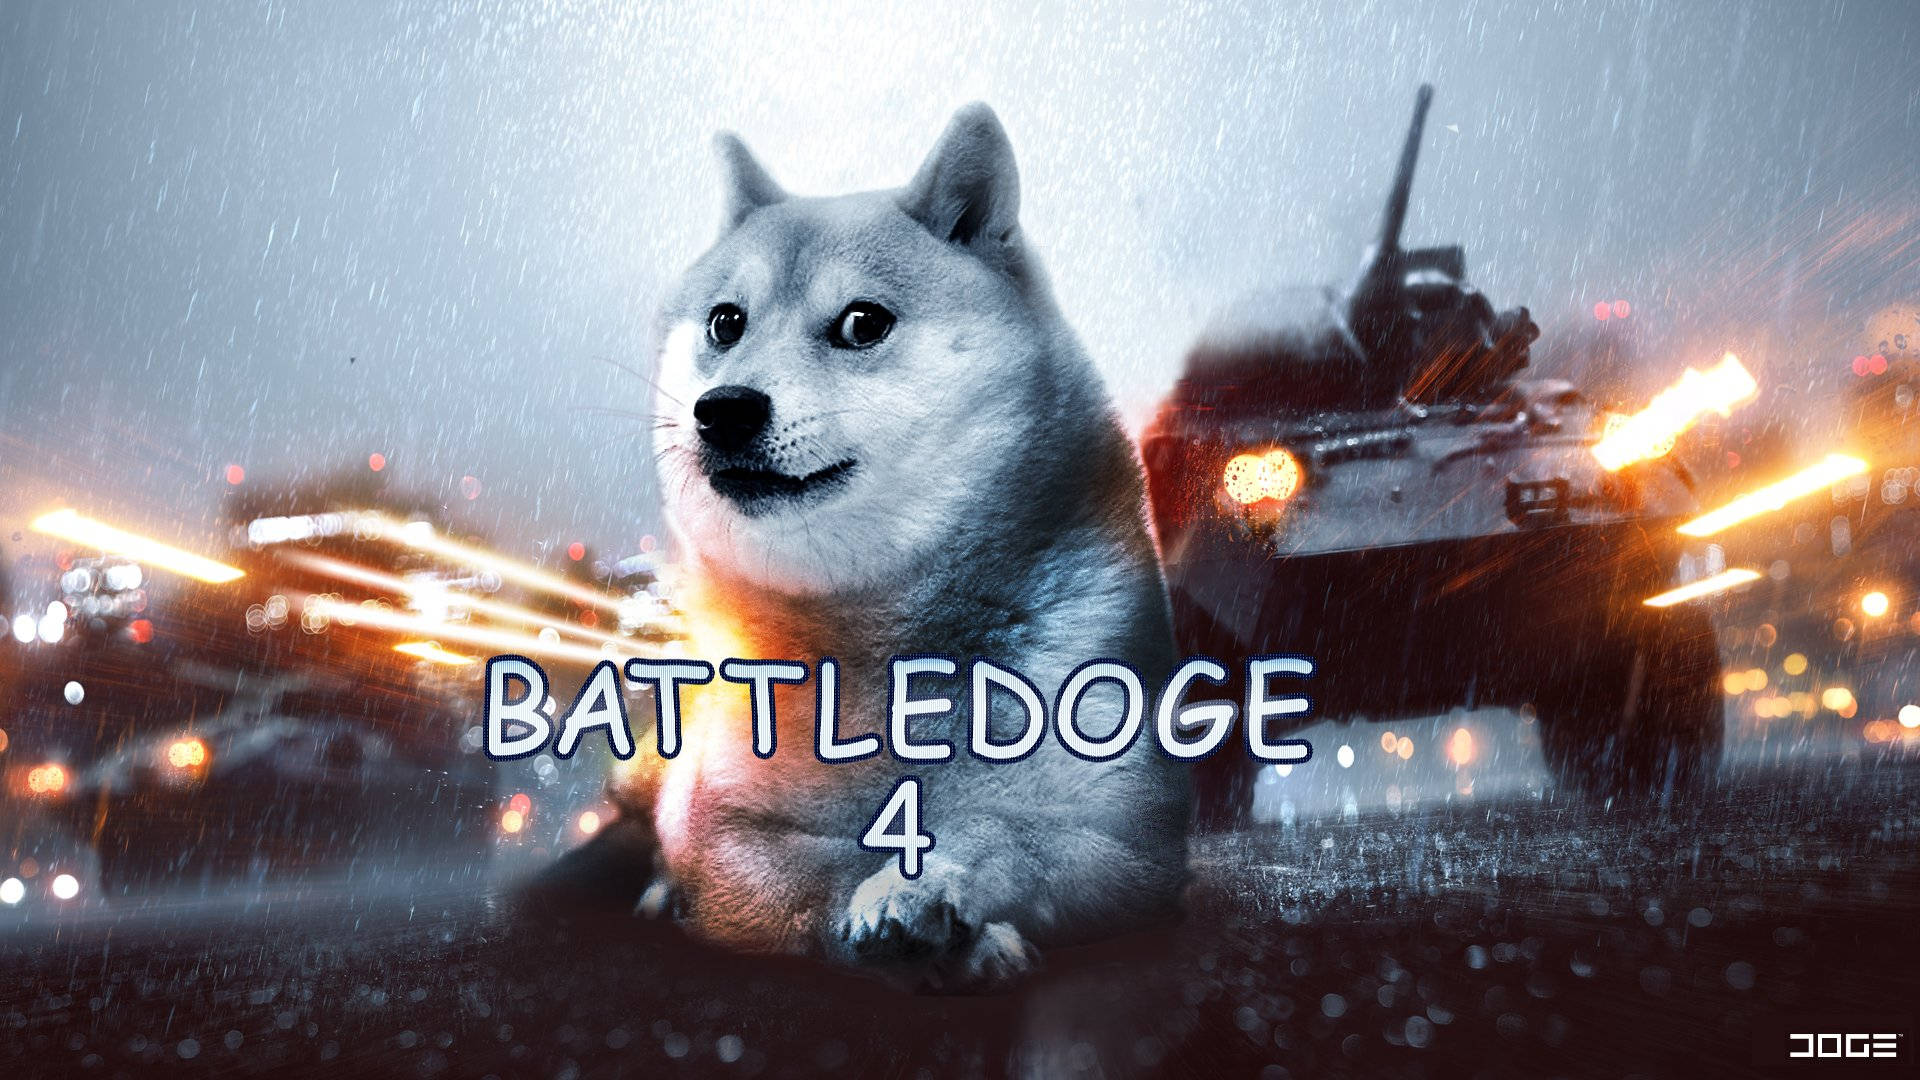 Battledoge 4 Doge Meme Wallpaper